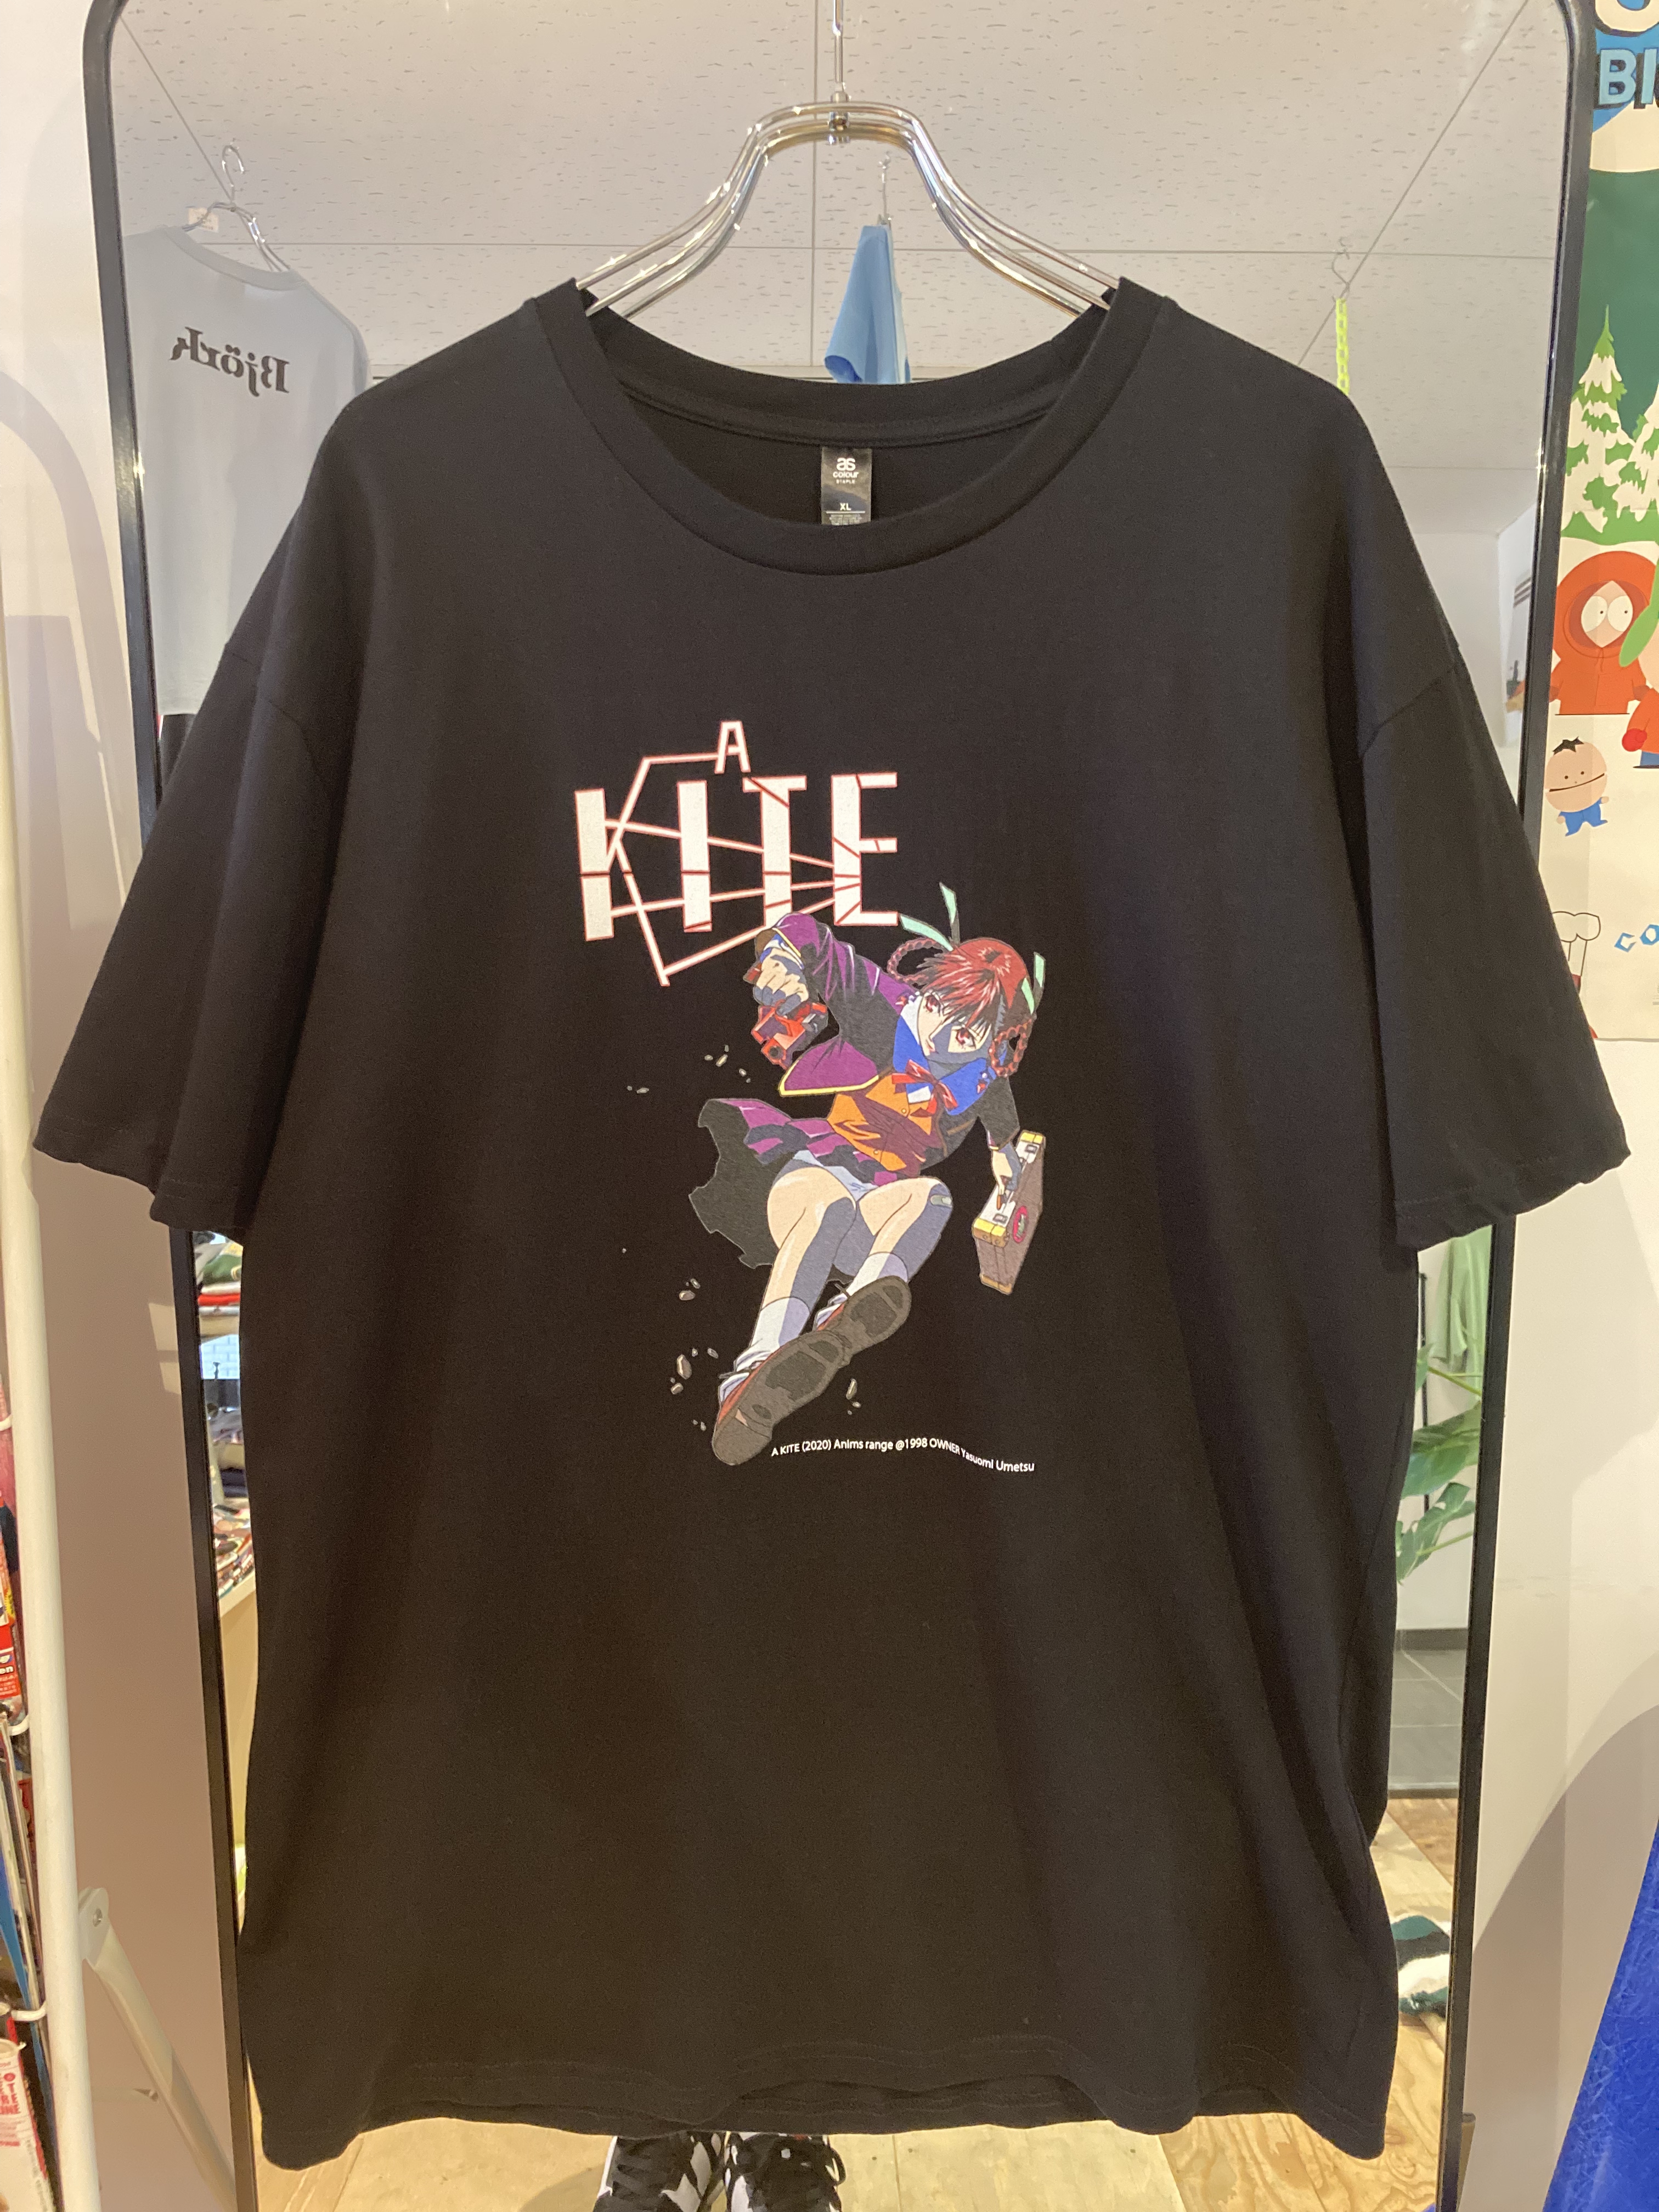 A KITE カイトvintage tシャツ